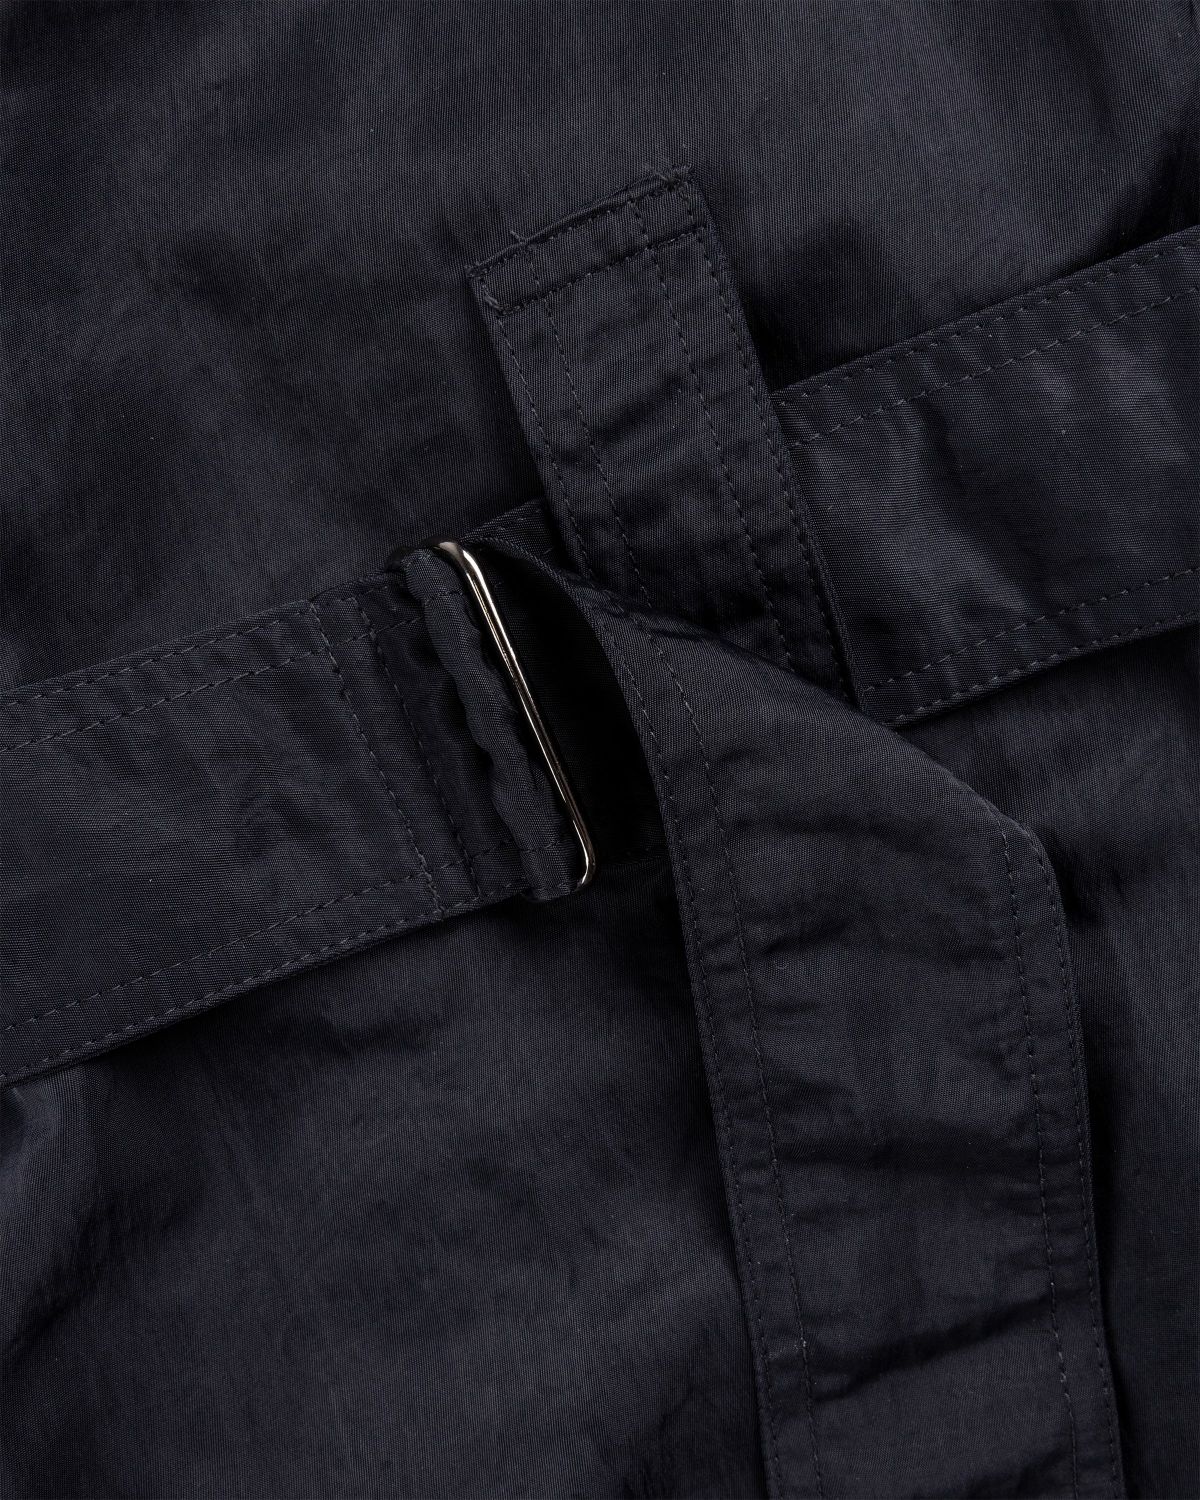 Dries van Noten – Primo Tape Pants Black - Pants - Black - Image 6